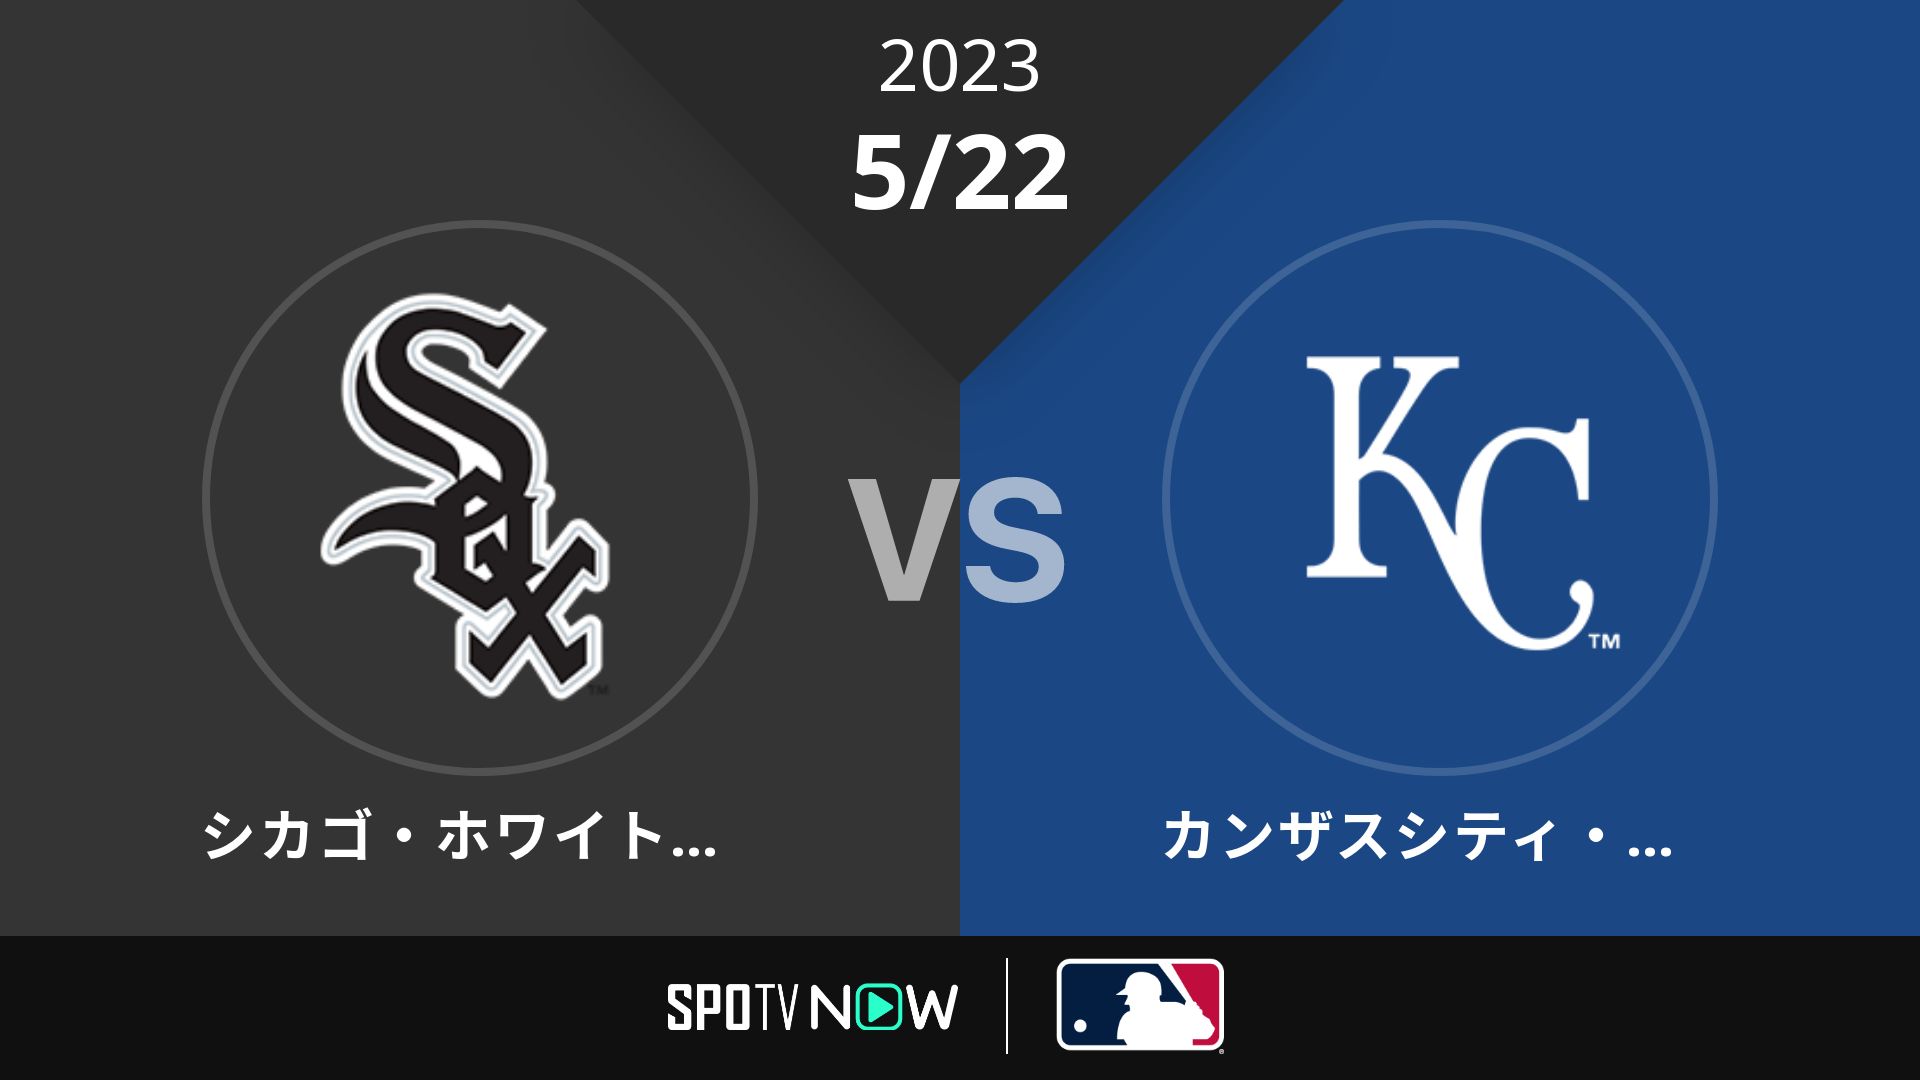 2023/5/22 Wソックス vs ロイヤルズ [MLB]